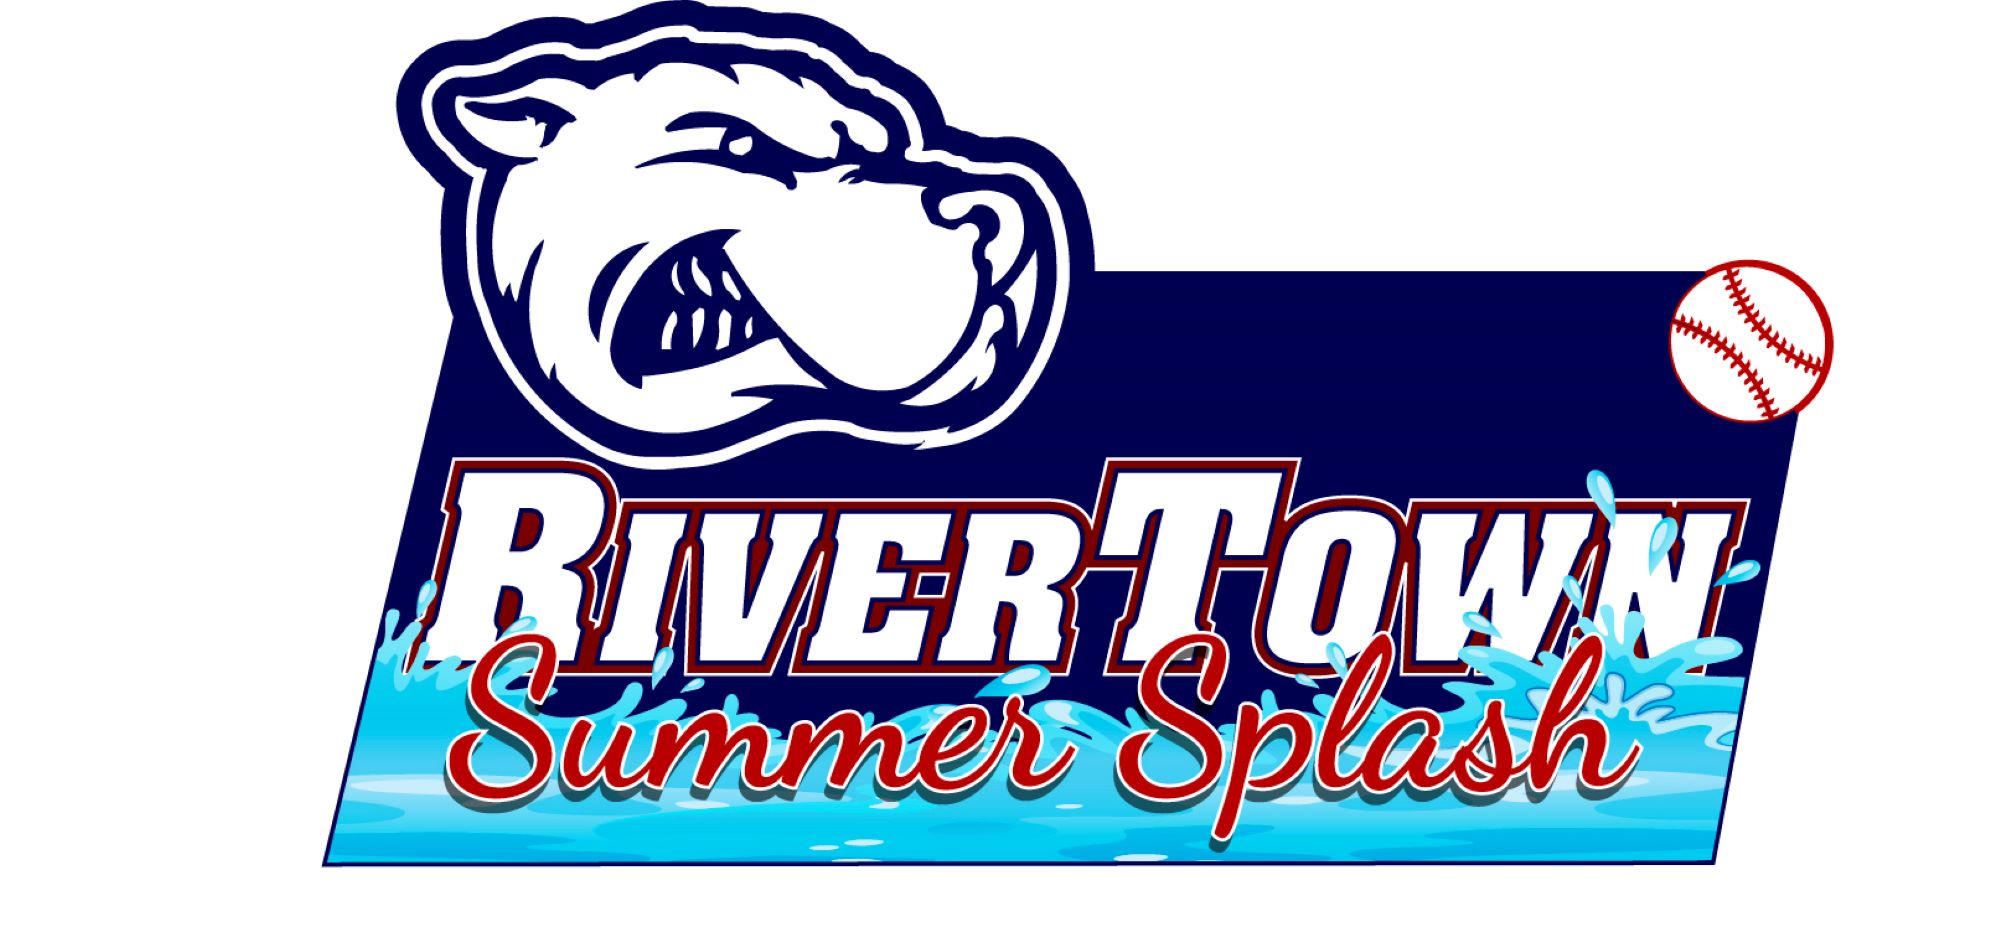 Rivertown Summer Splash Logo